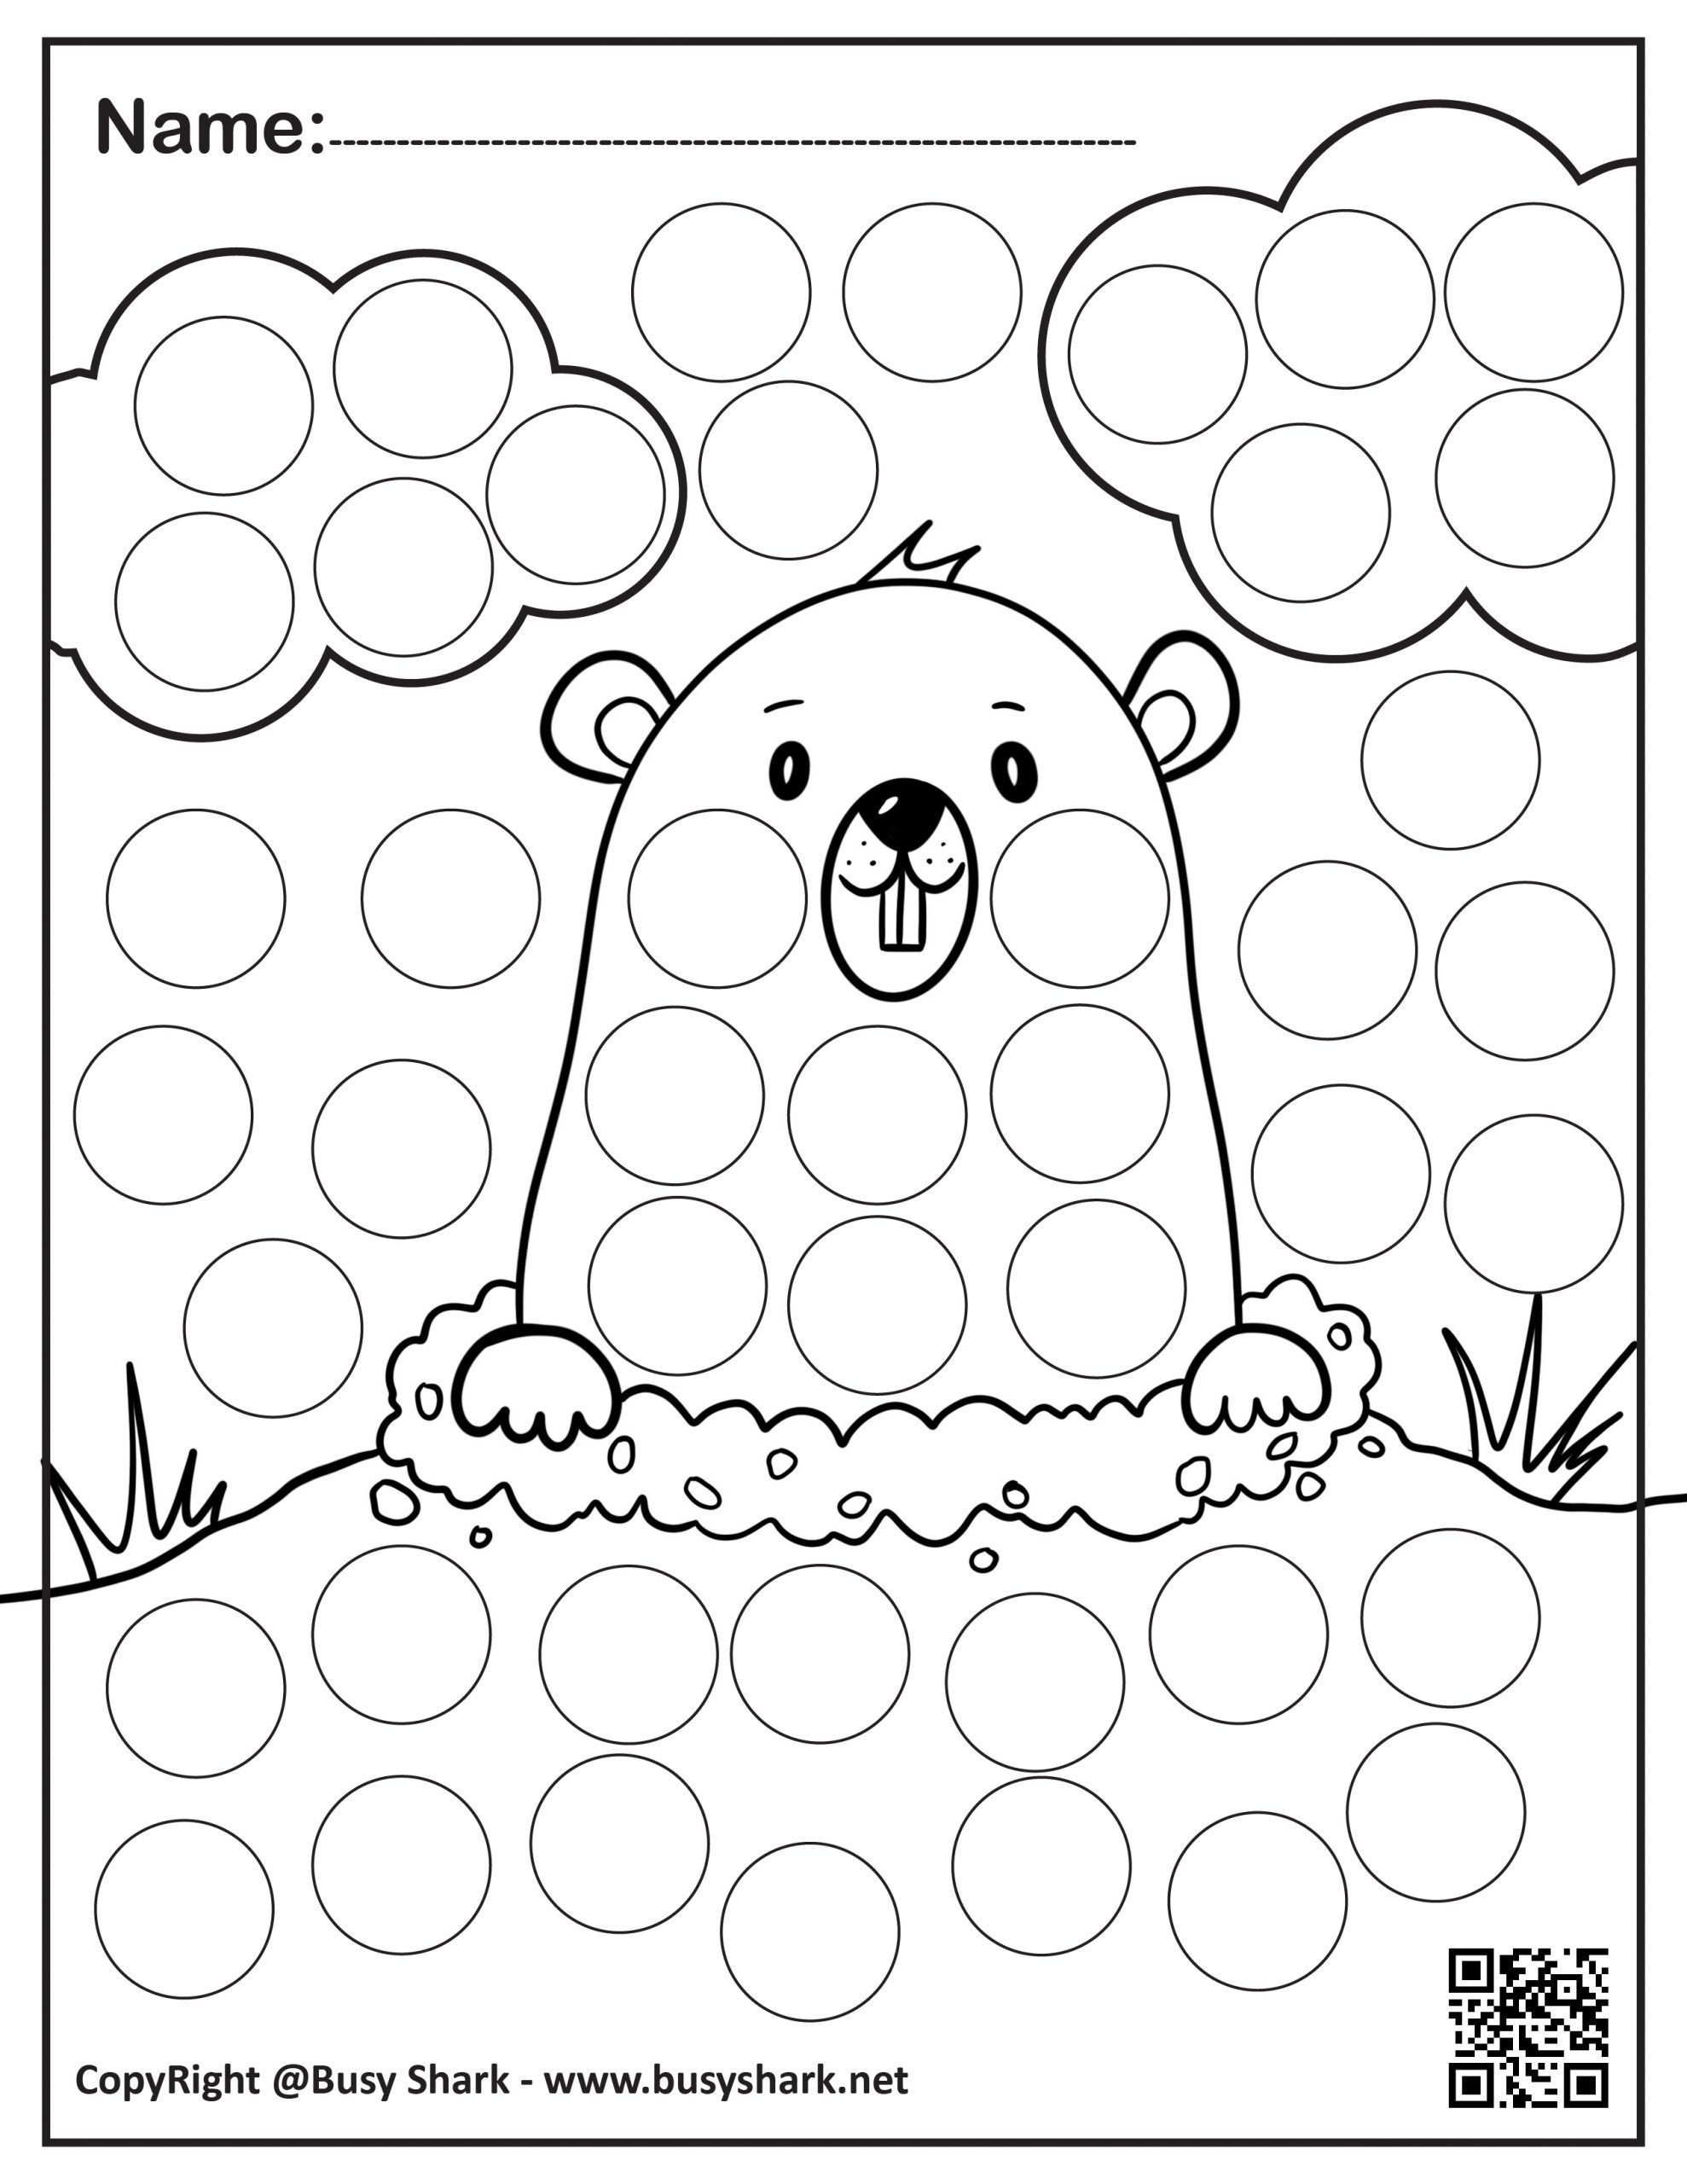 Groundhog dot markers coloring page free printable